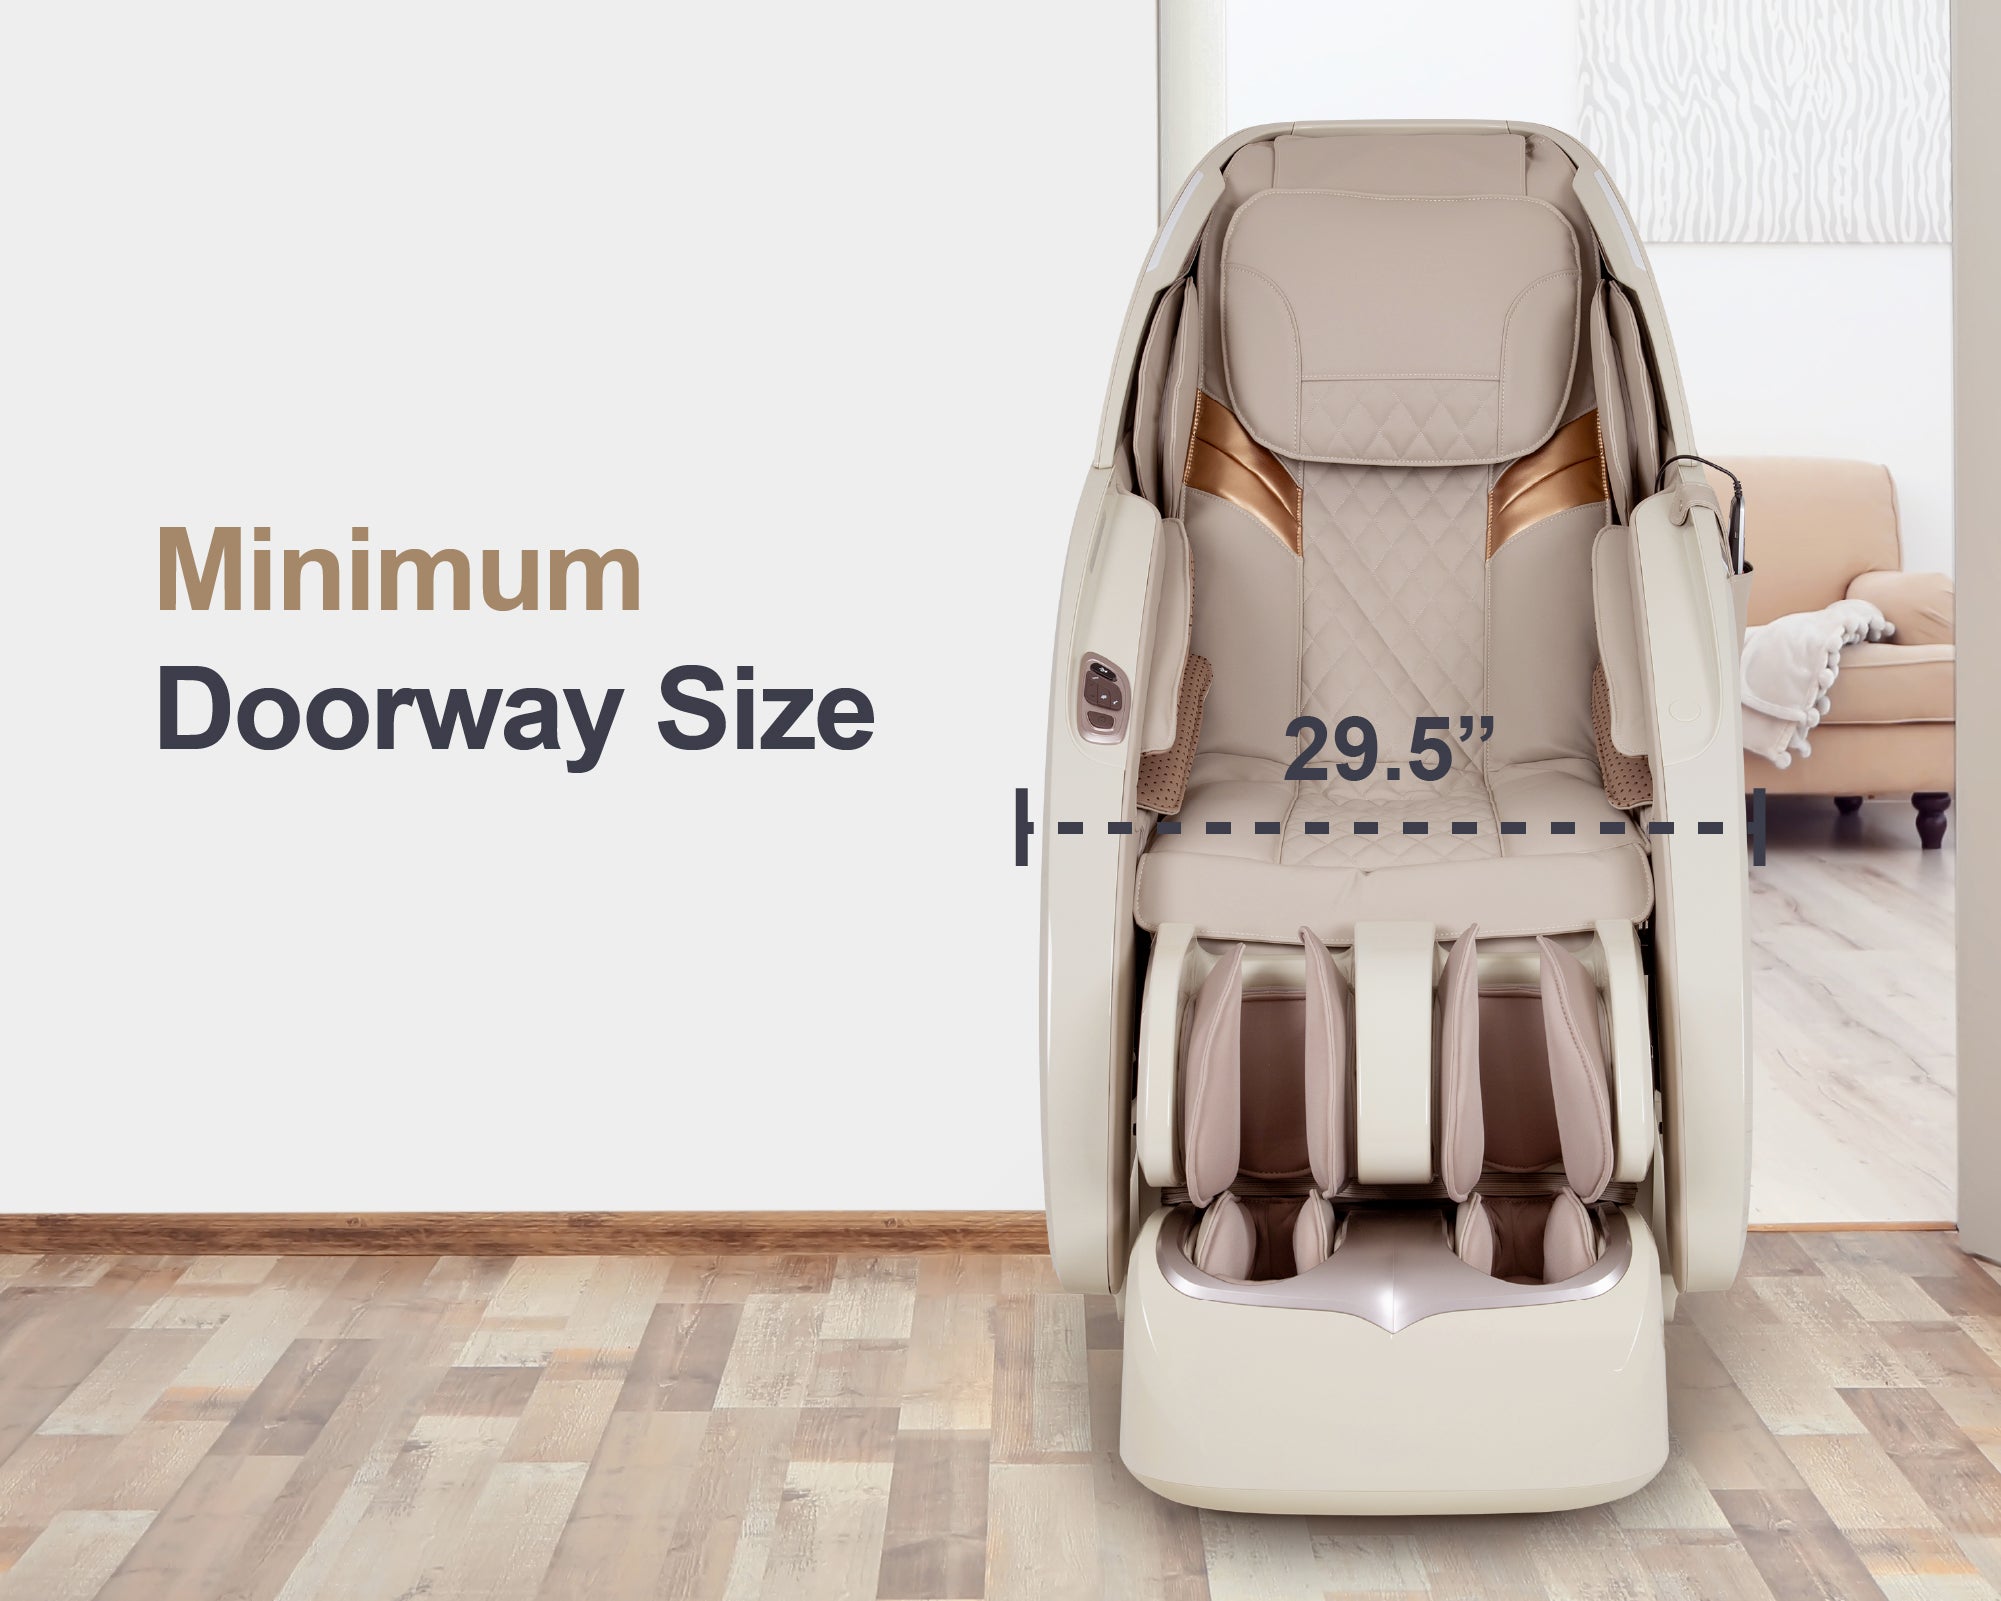 Osaki OS-Pro 3D Tecno Full Body Massage Chair, Minimum Doorway Size